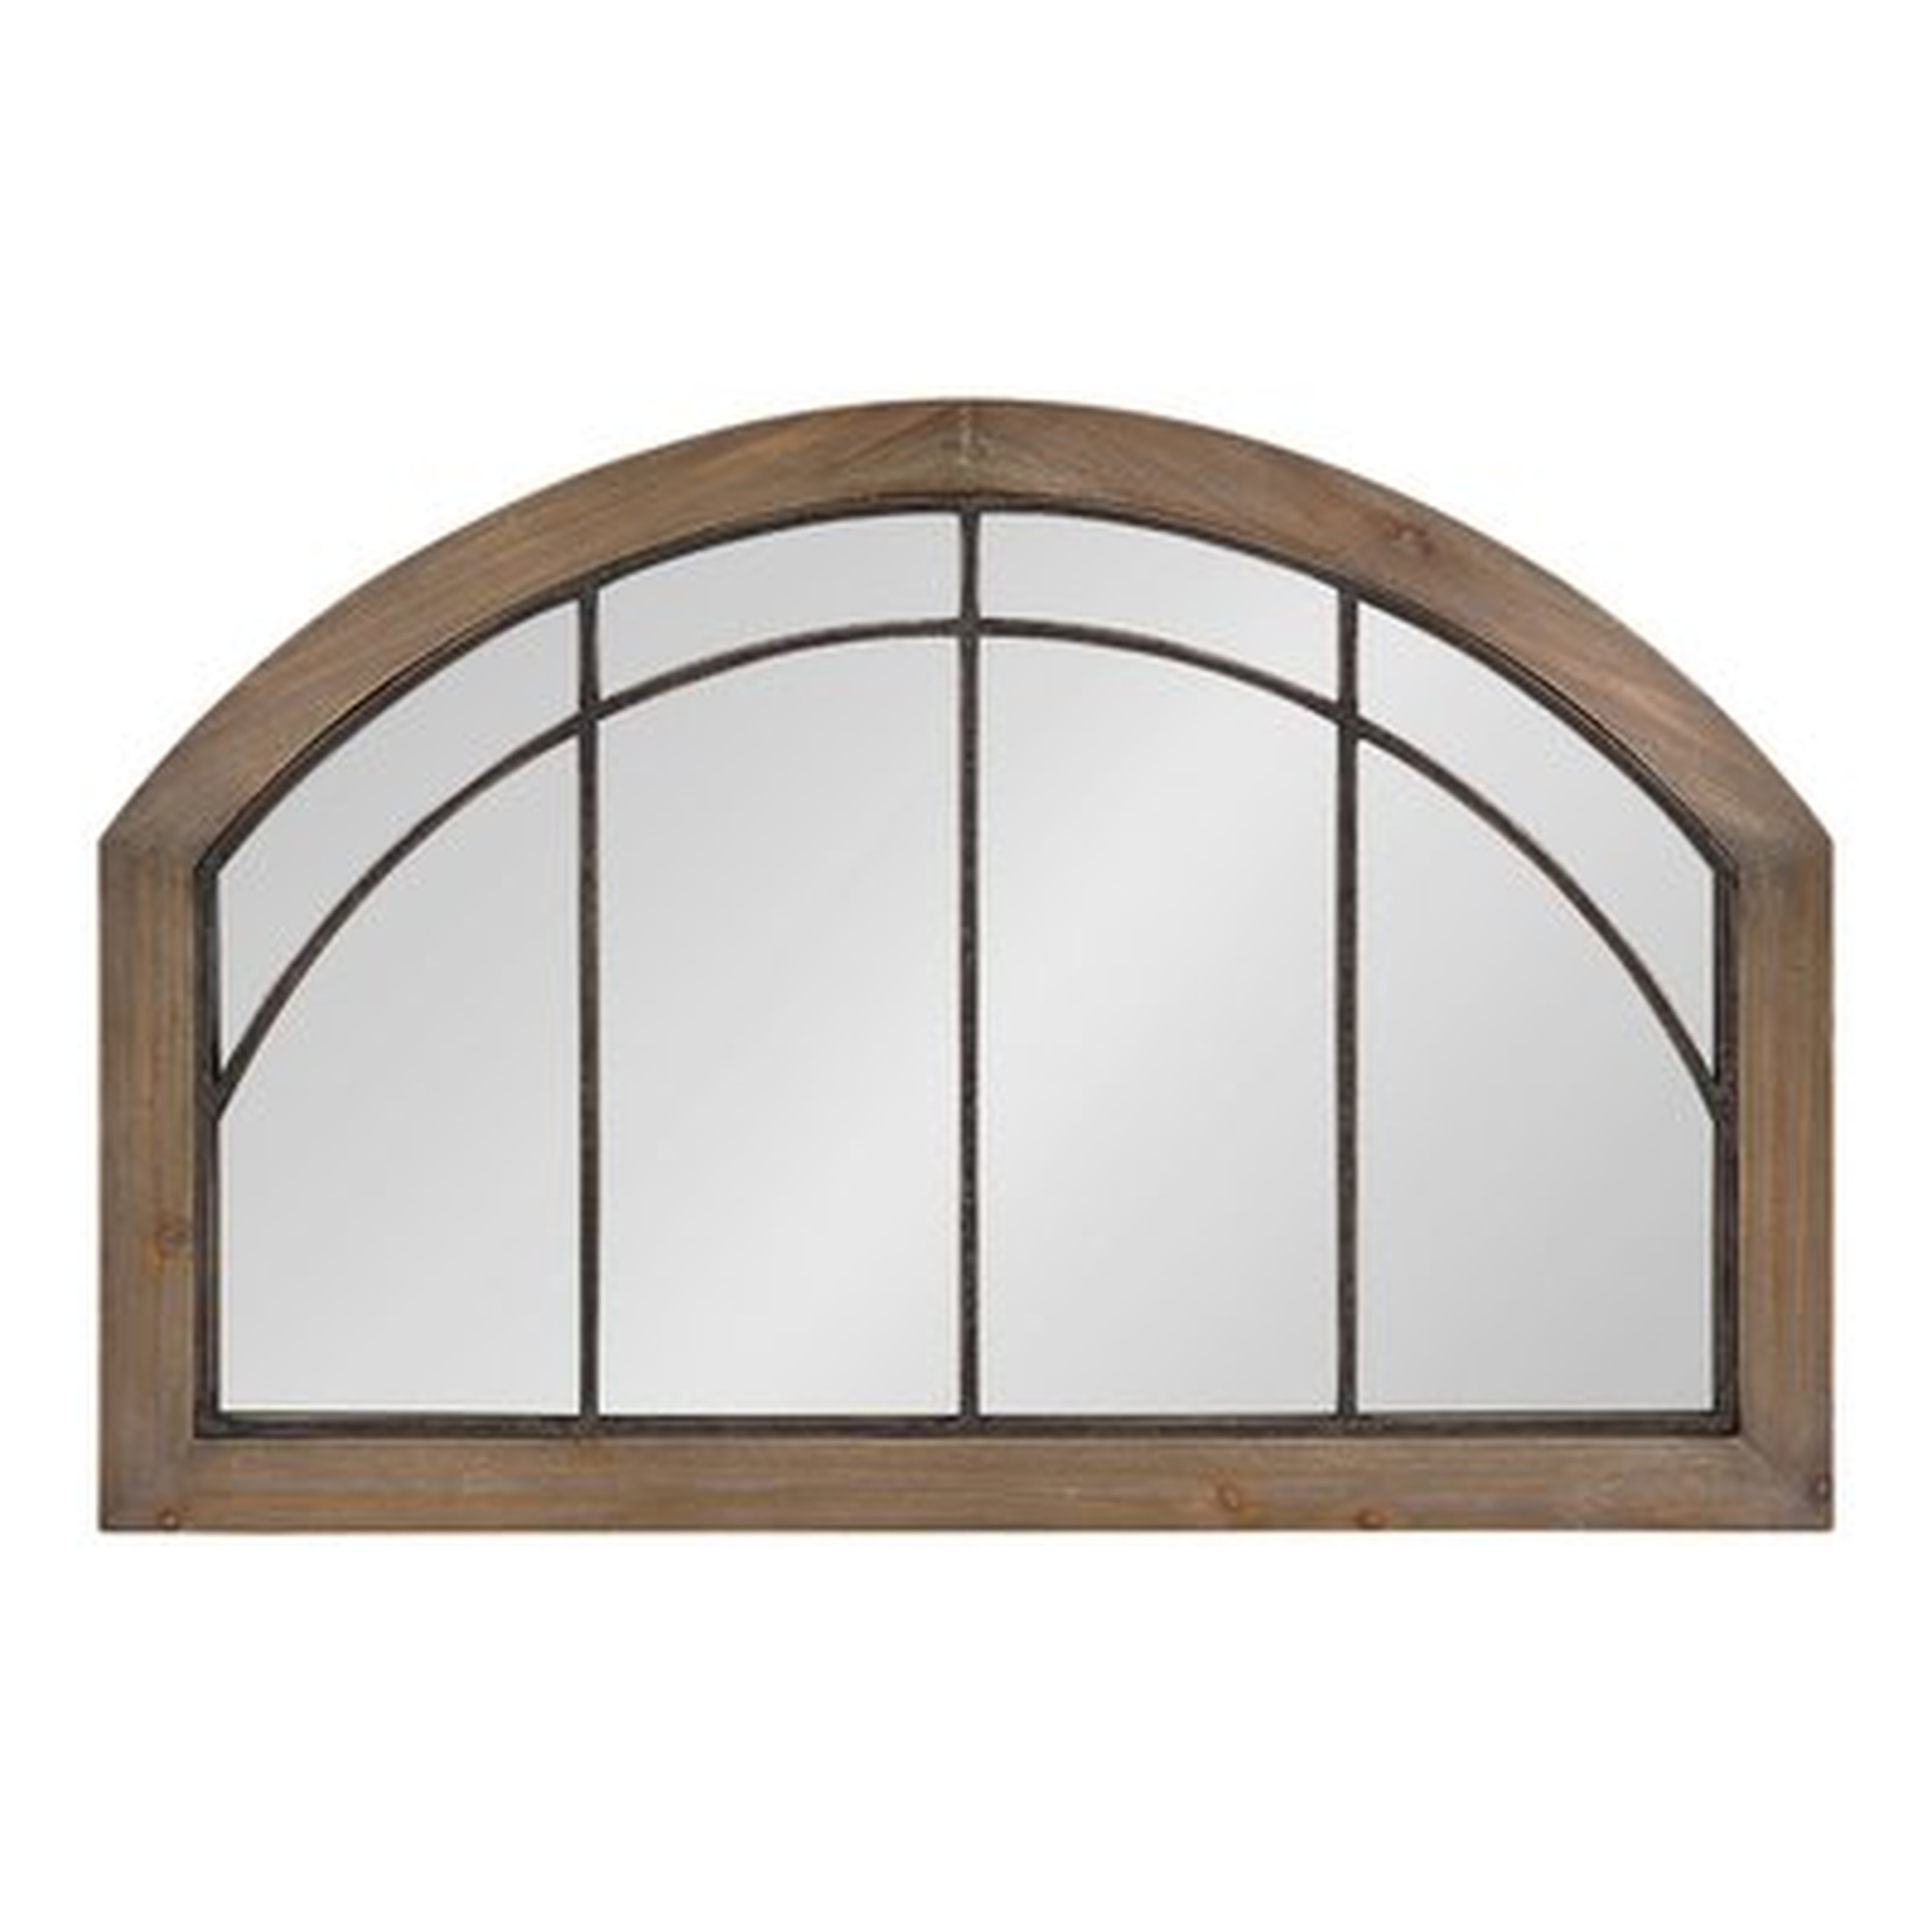 Treadwell Traditional Wood Arch Accent Mirror - Birch Lane